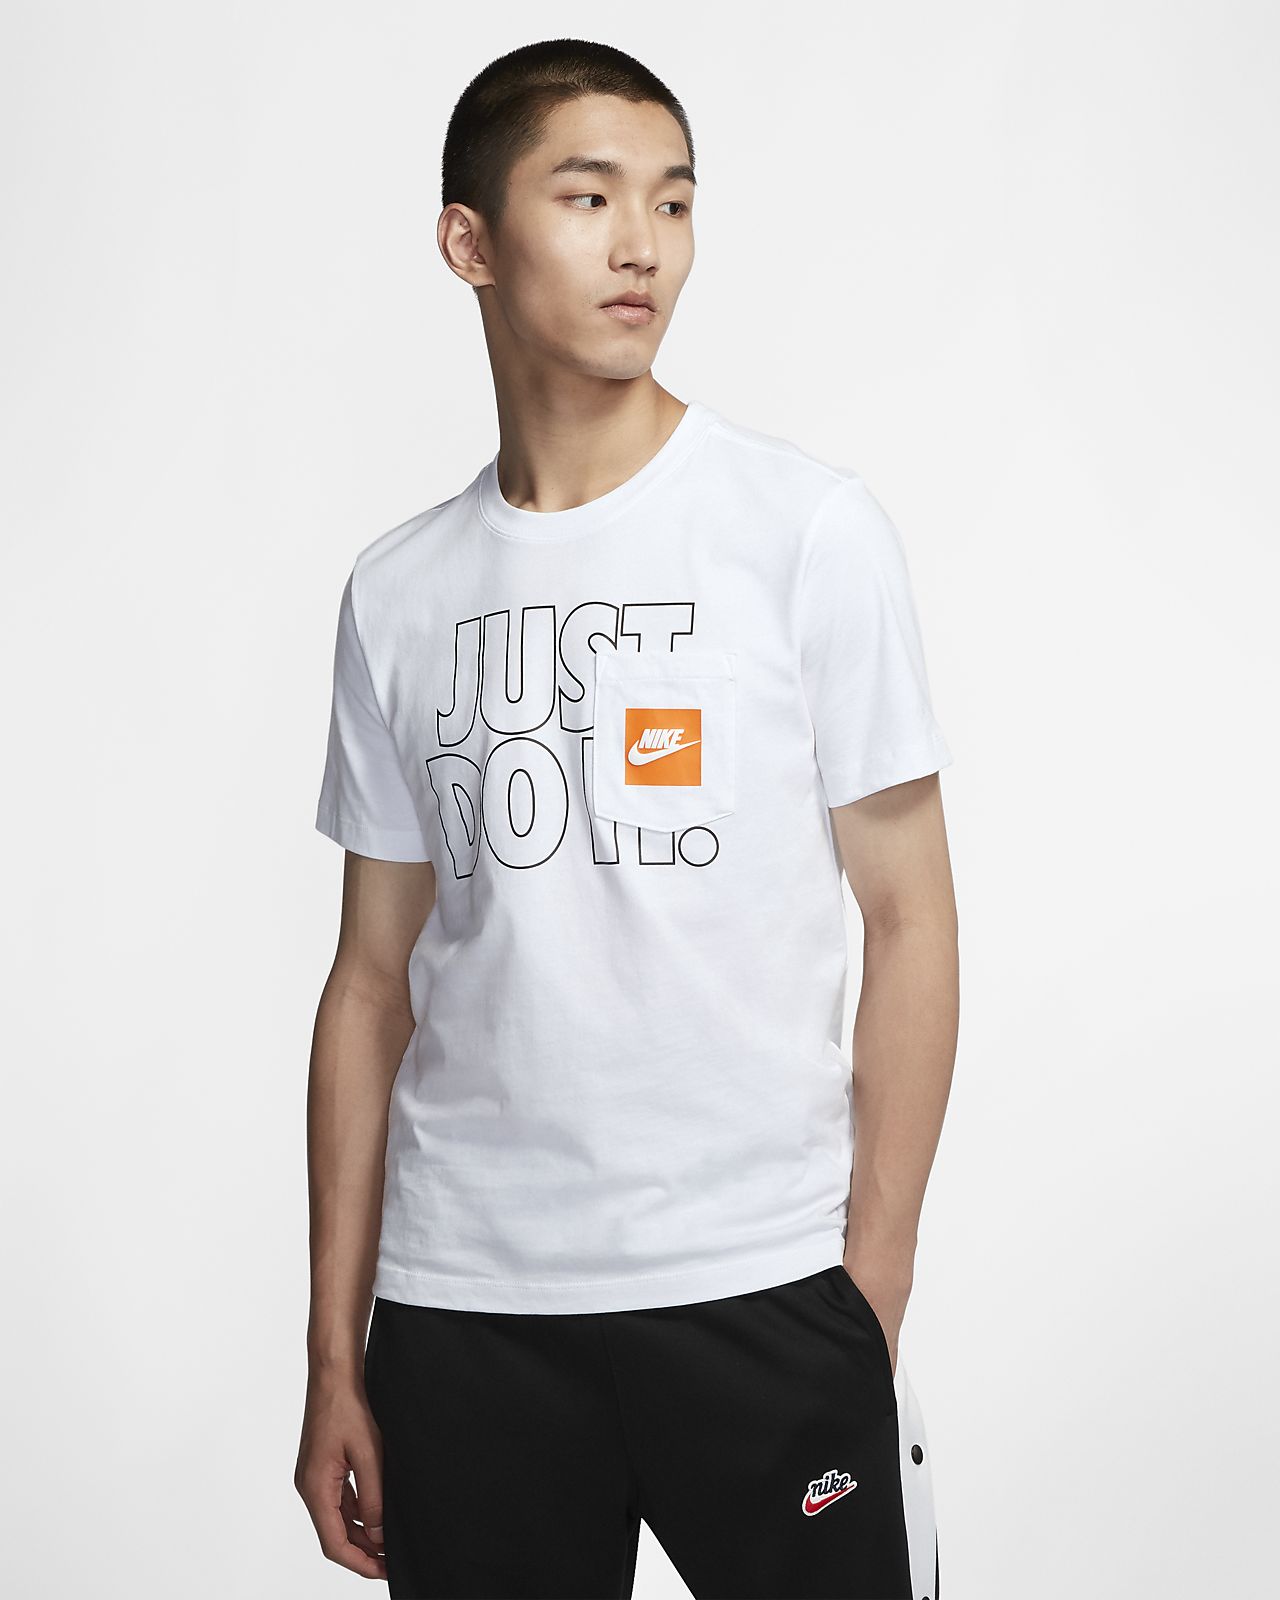 Nike Sportswear Men's JDI T-Shirt. Nike SG